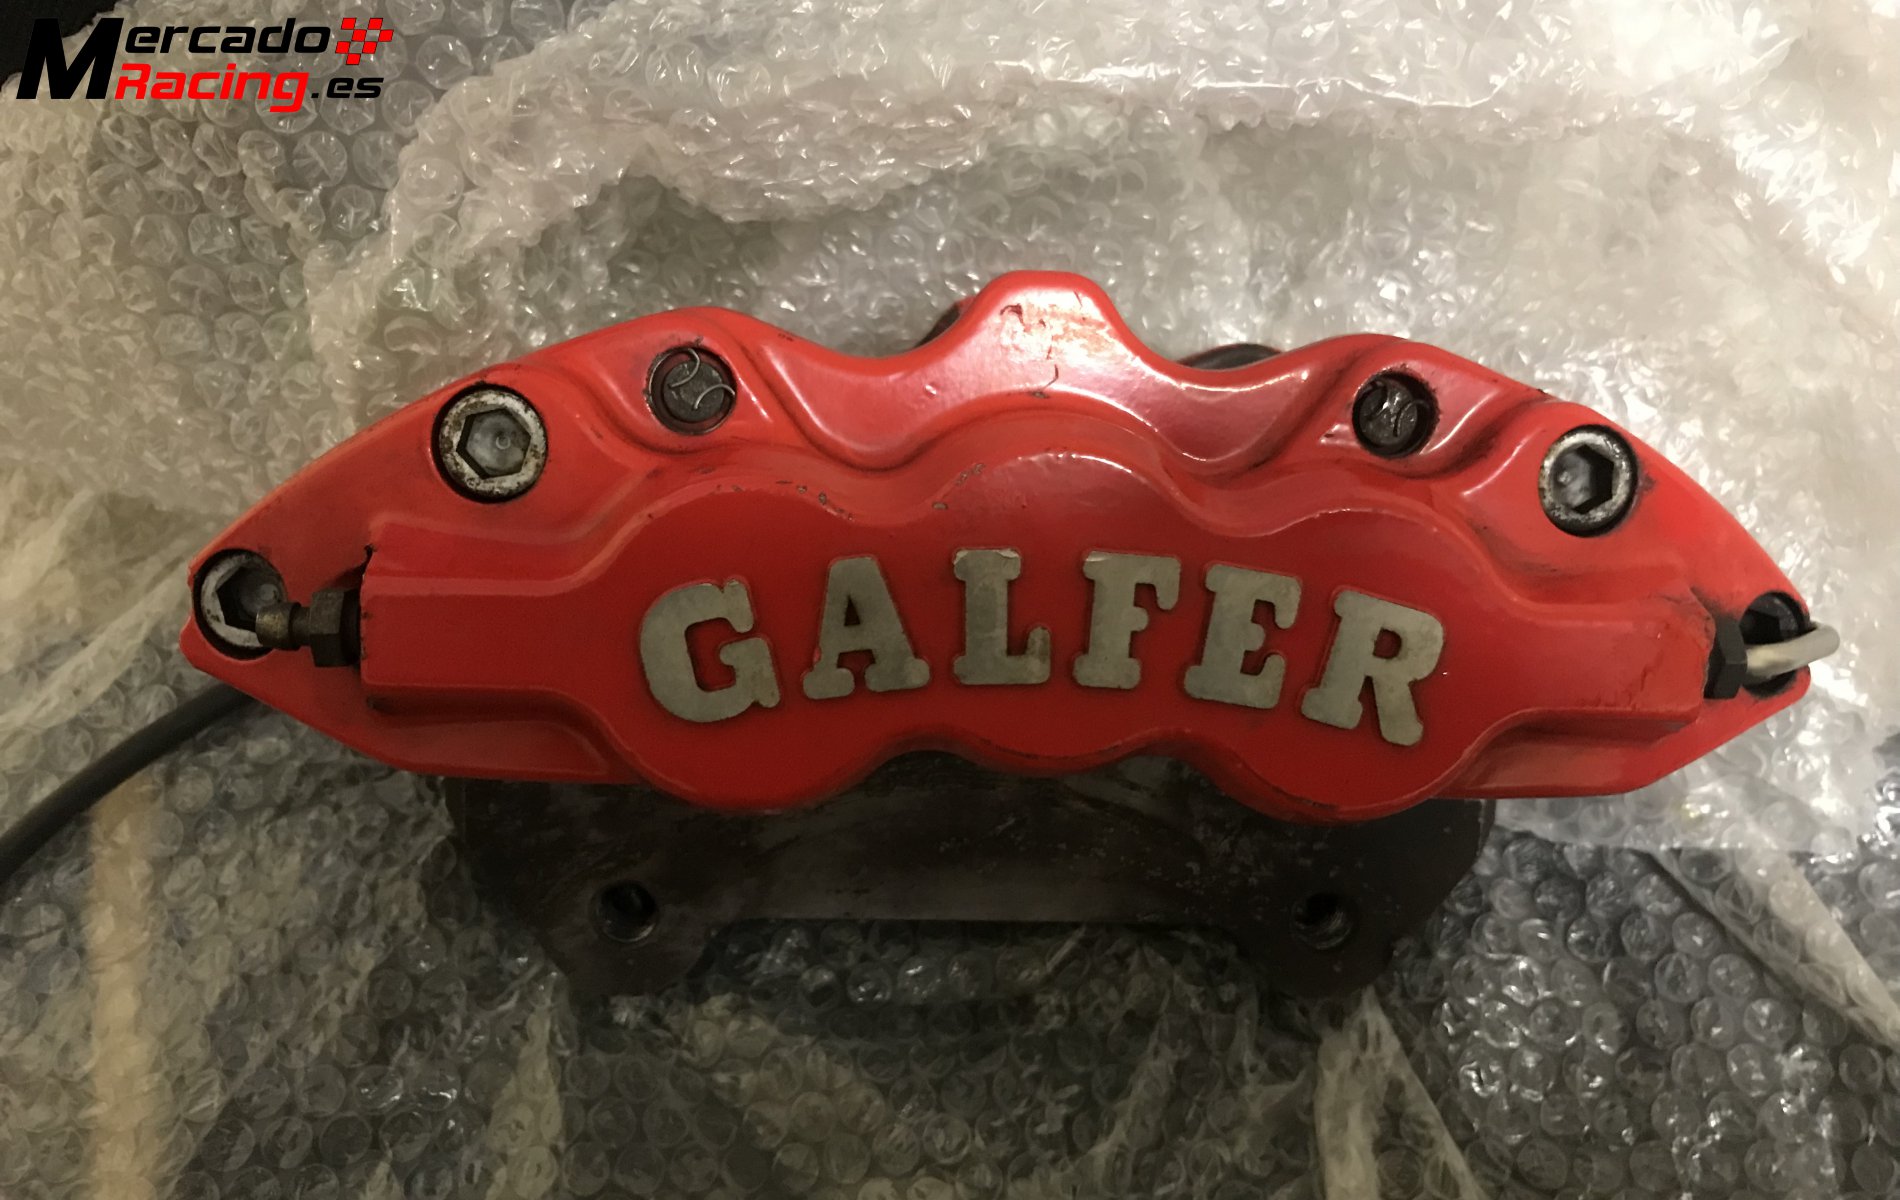 Galfer 6 pistones 